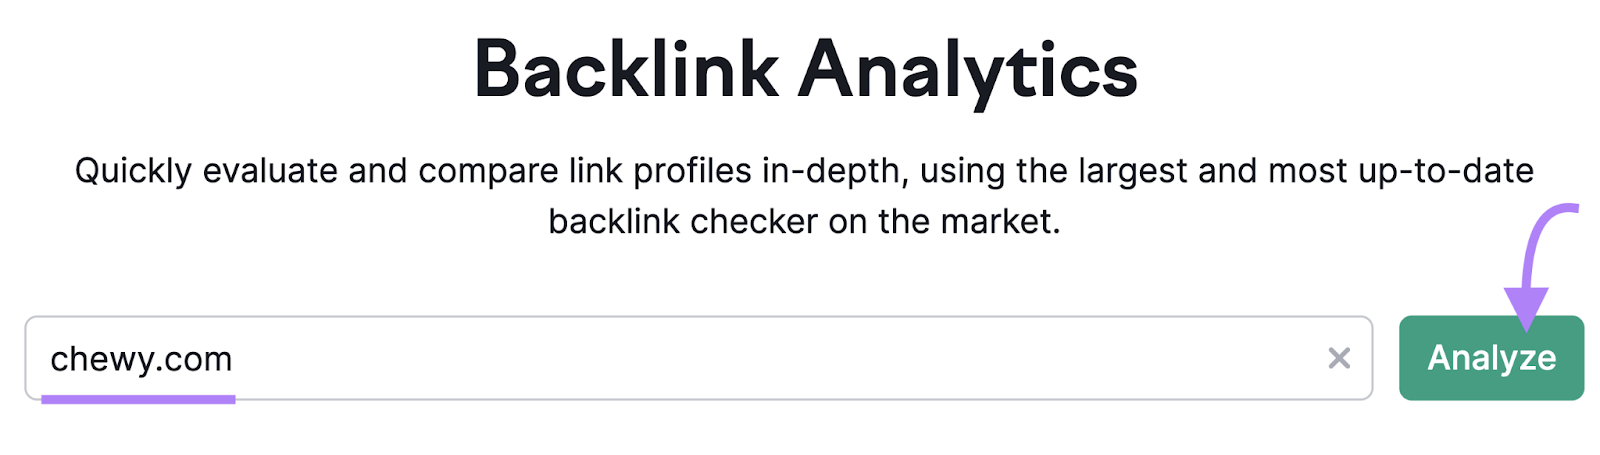 Backlink Analytics tool